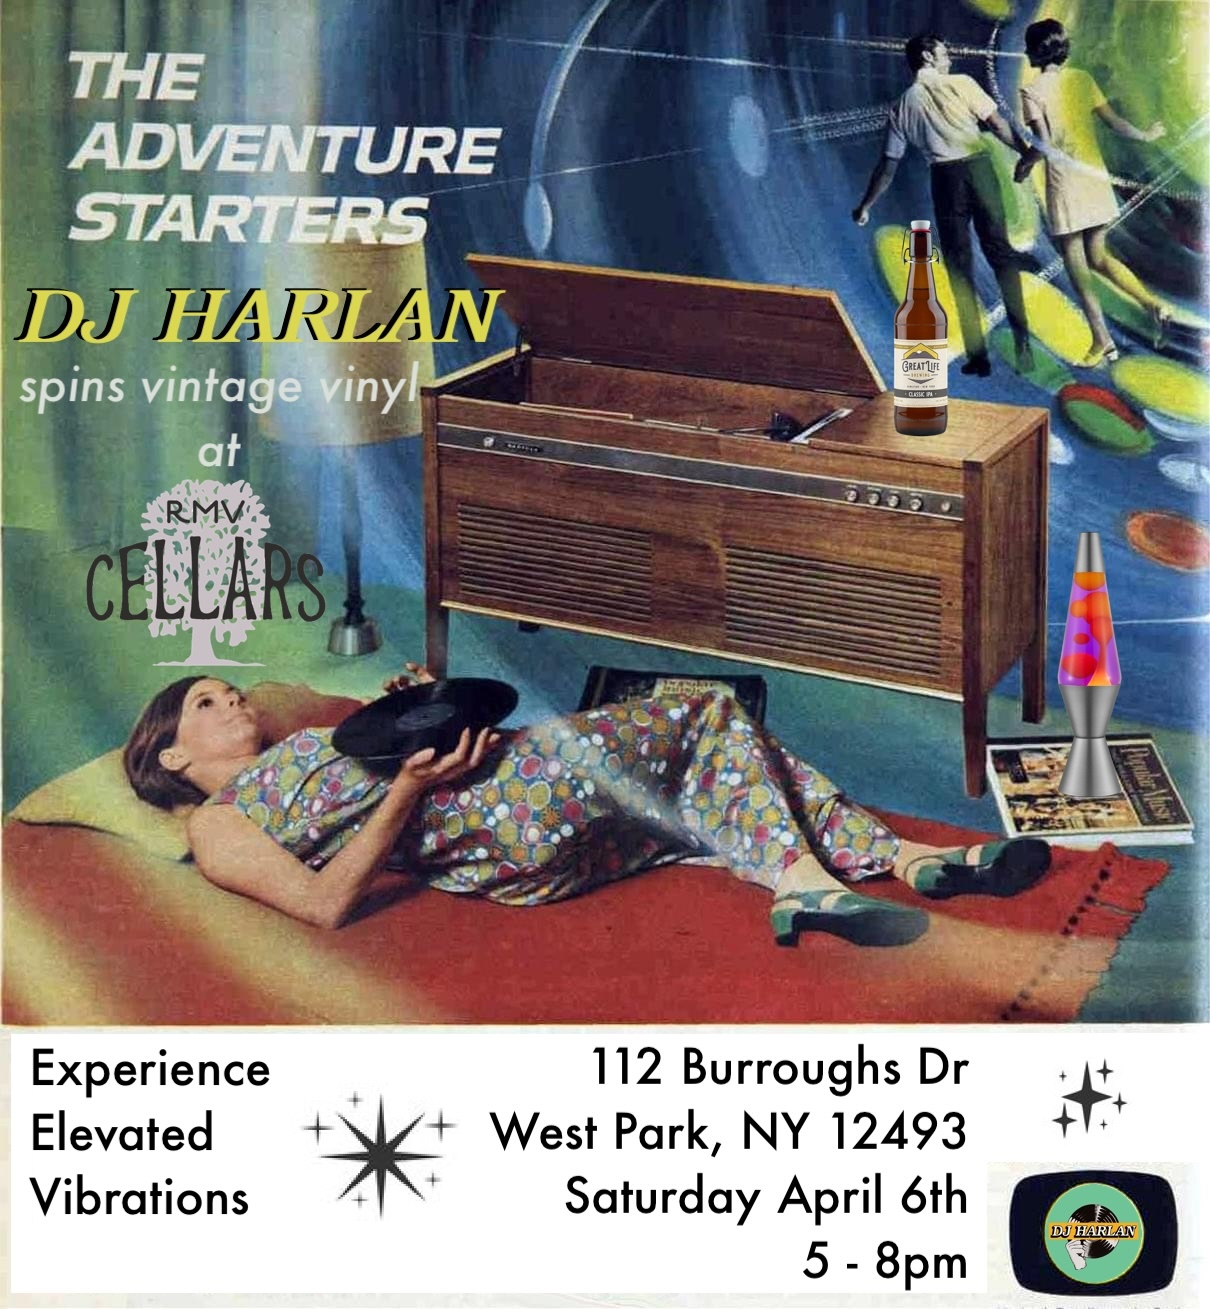 DJ HARLAN Spins Vintage at RMV Cellars